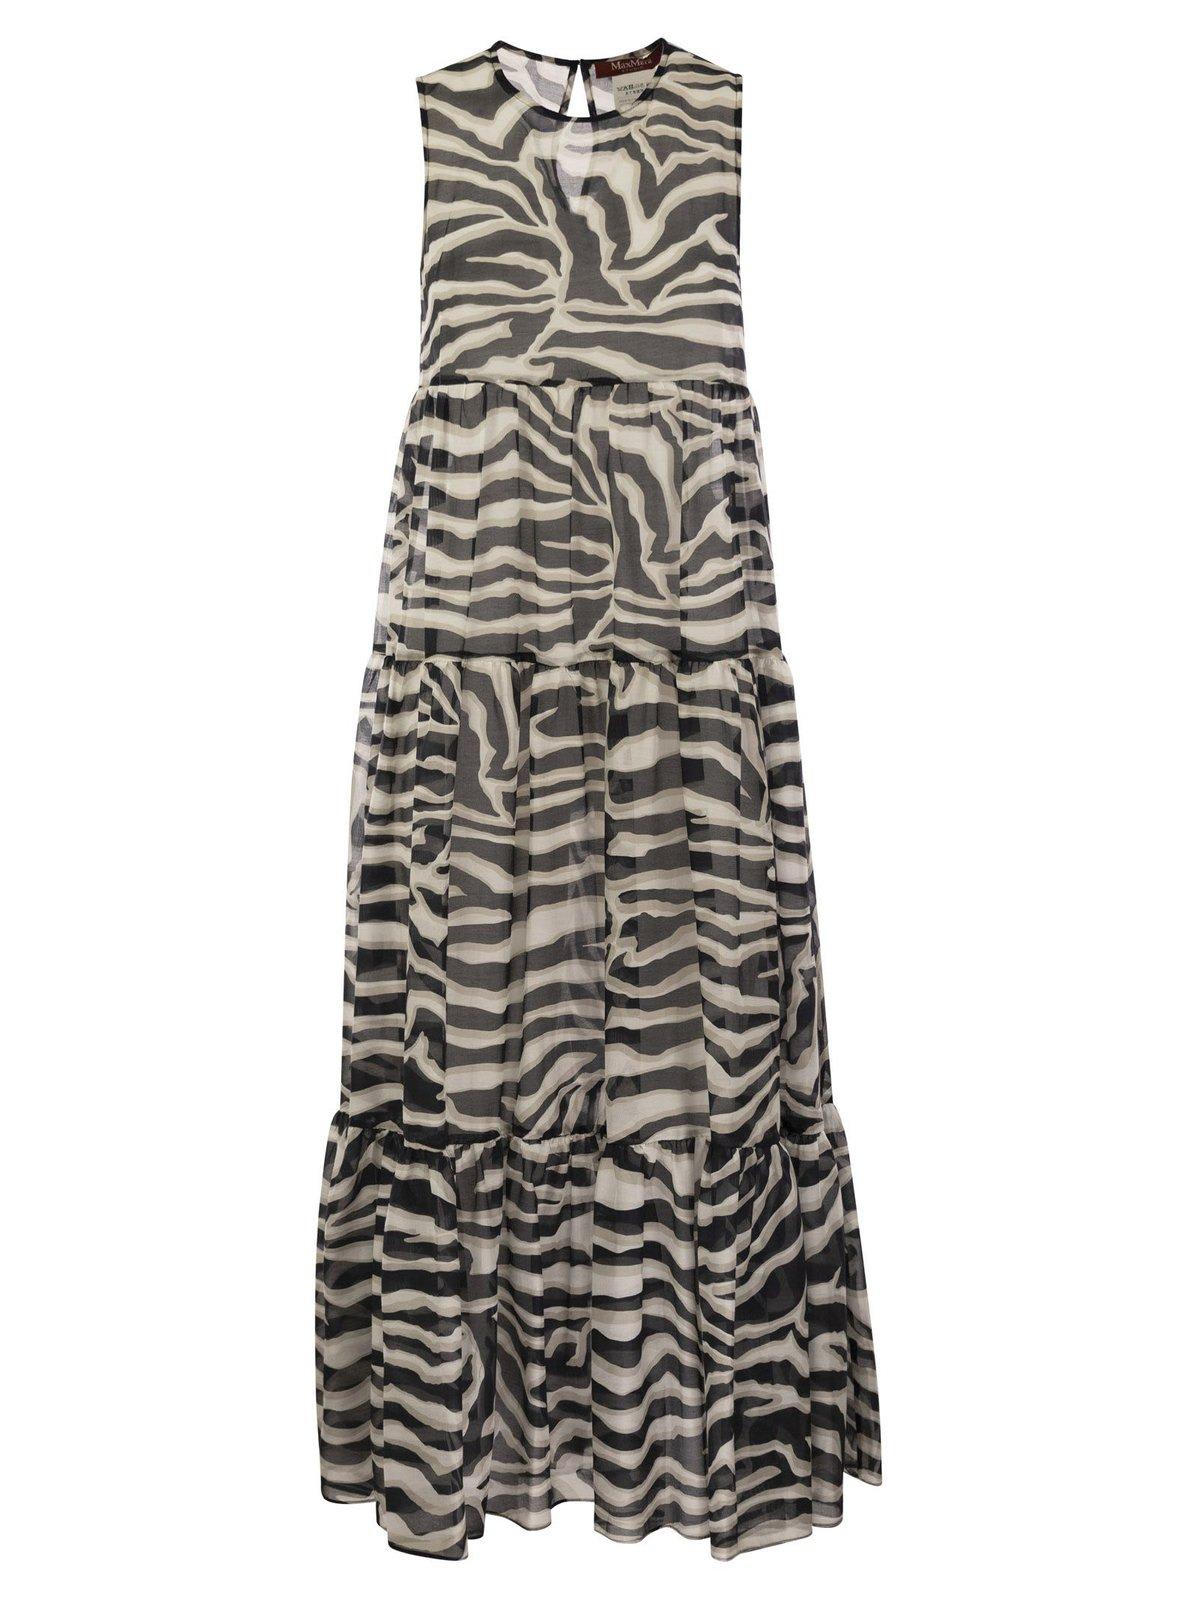 Zebra Printed Crewneck Sleeveless Dress